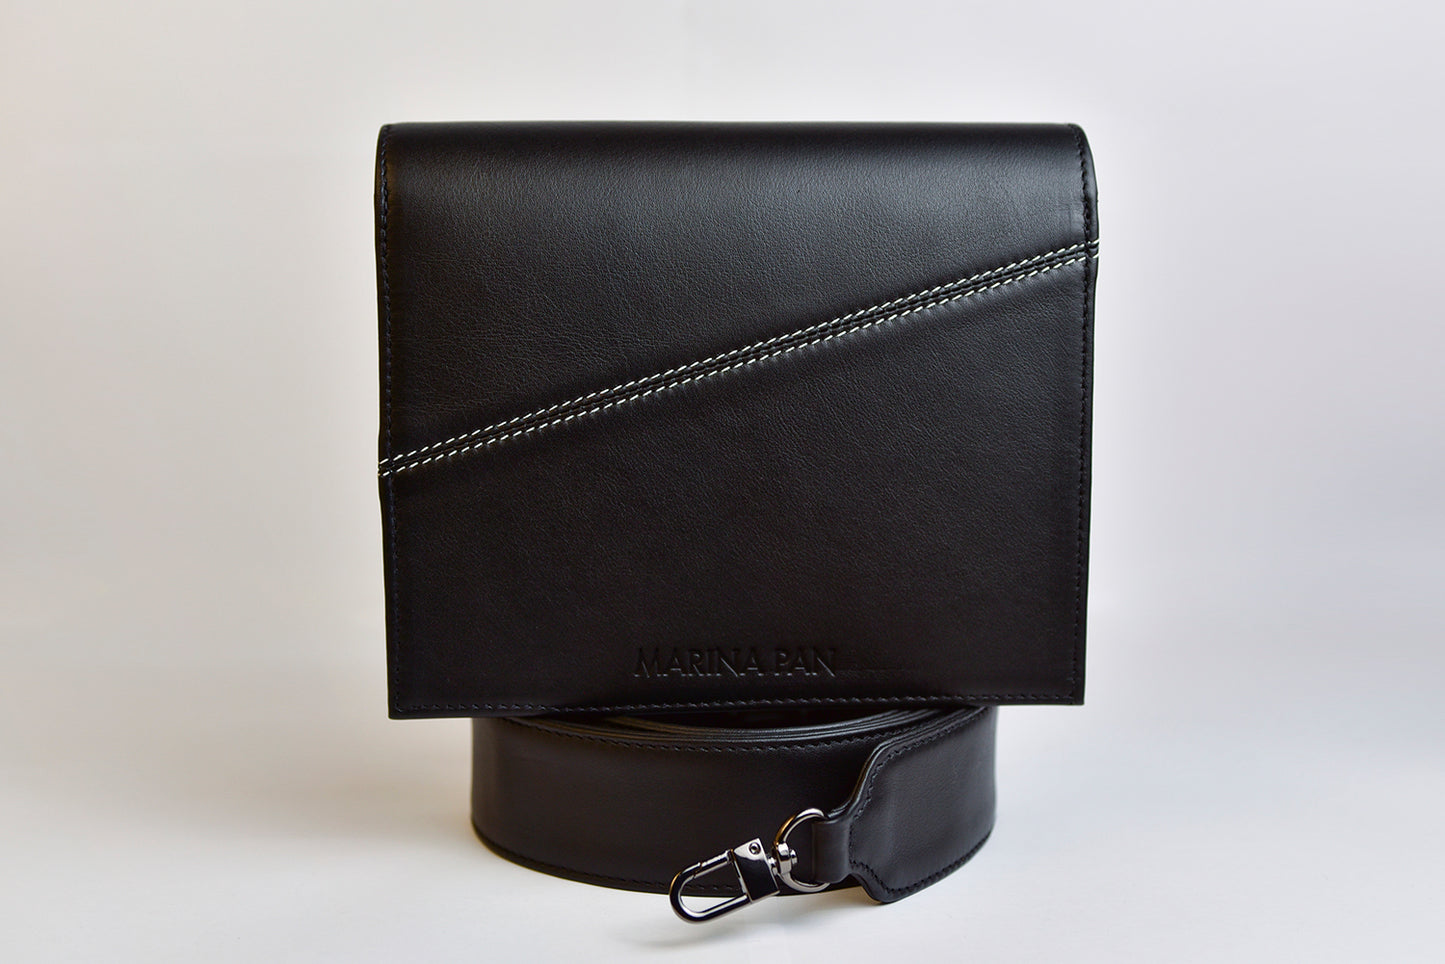 Black leather handbag clutch